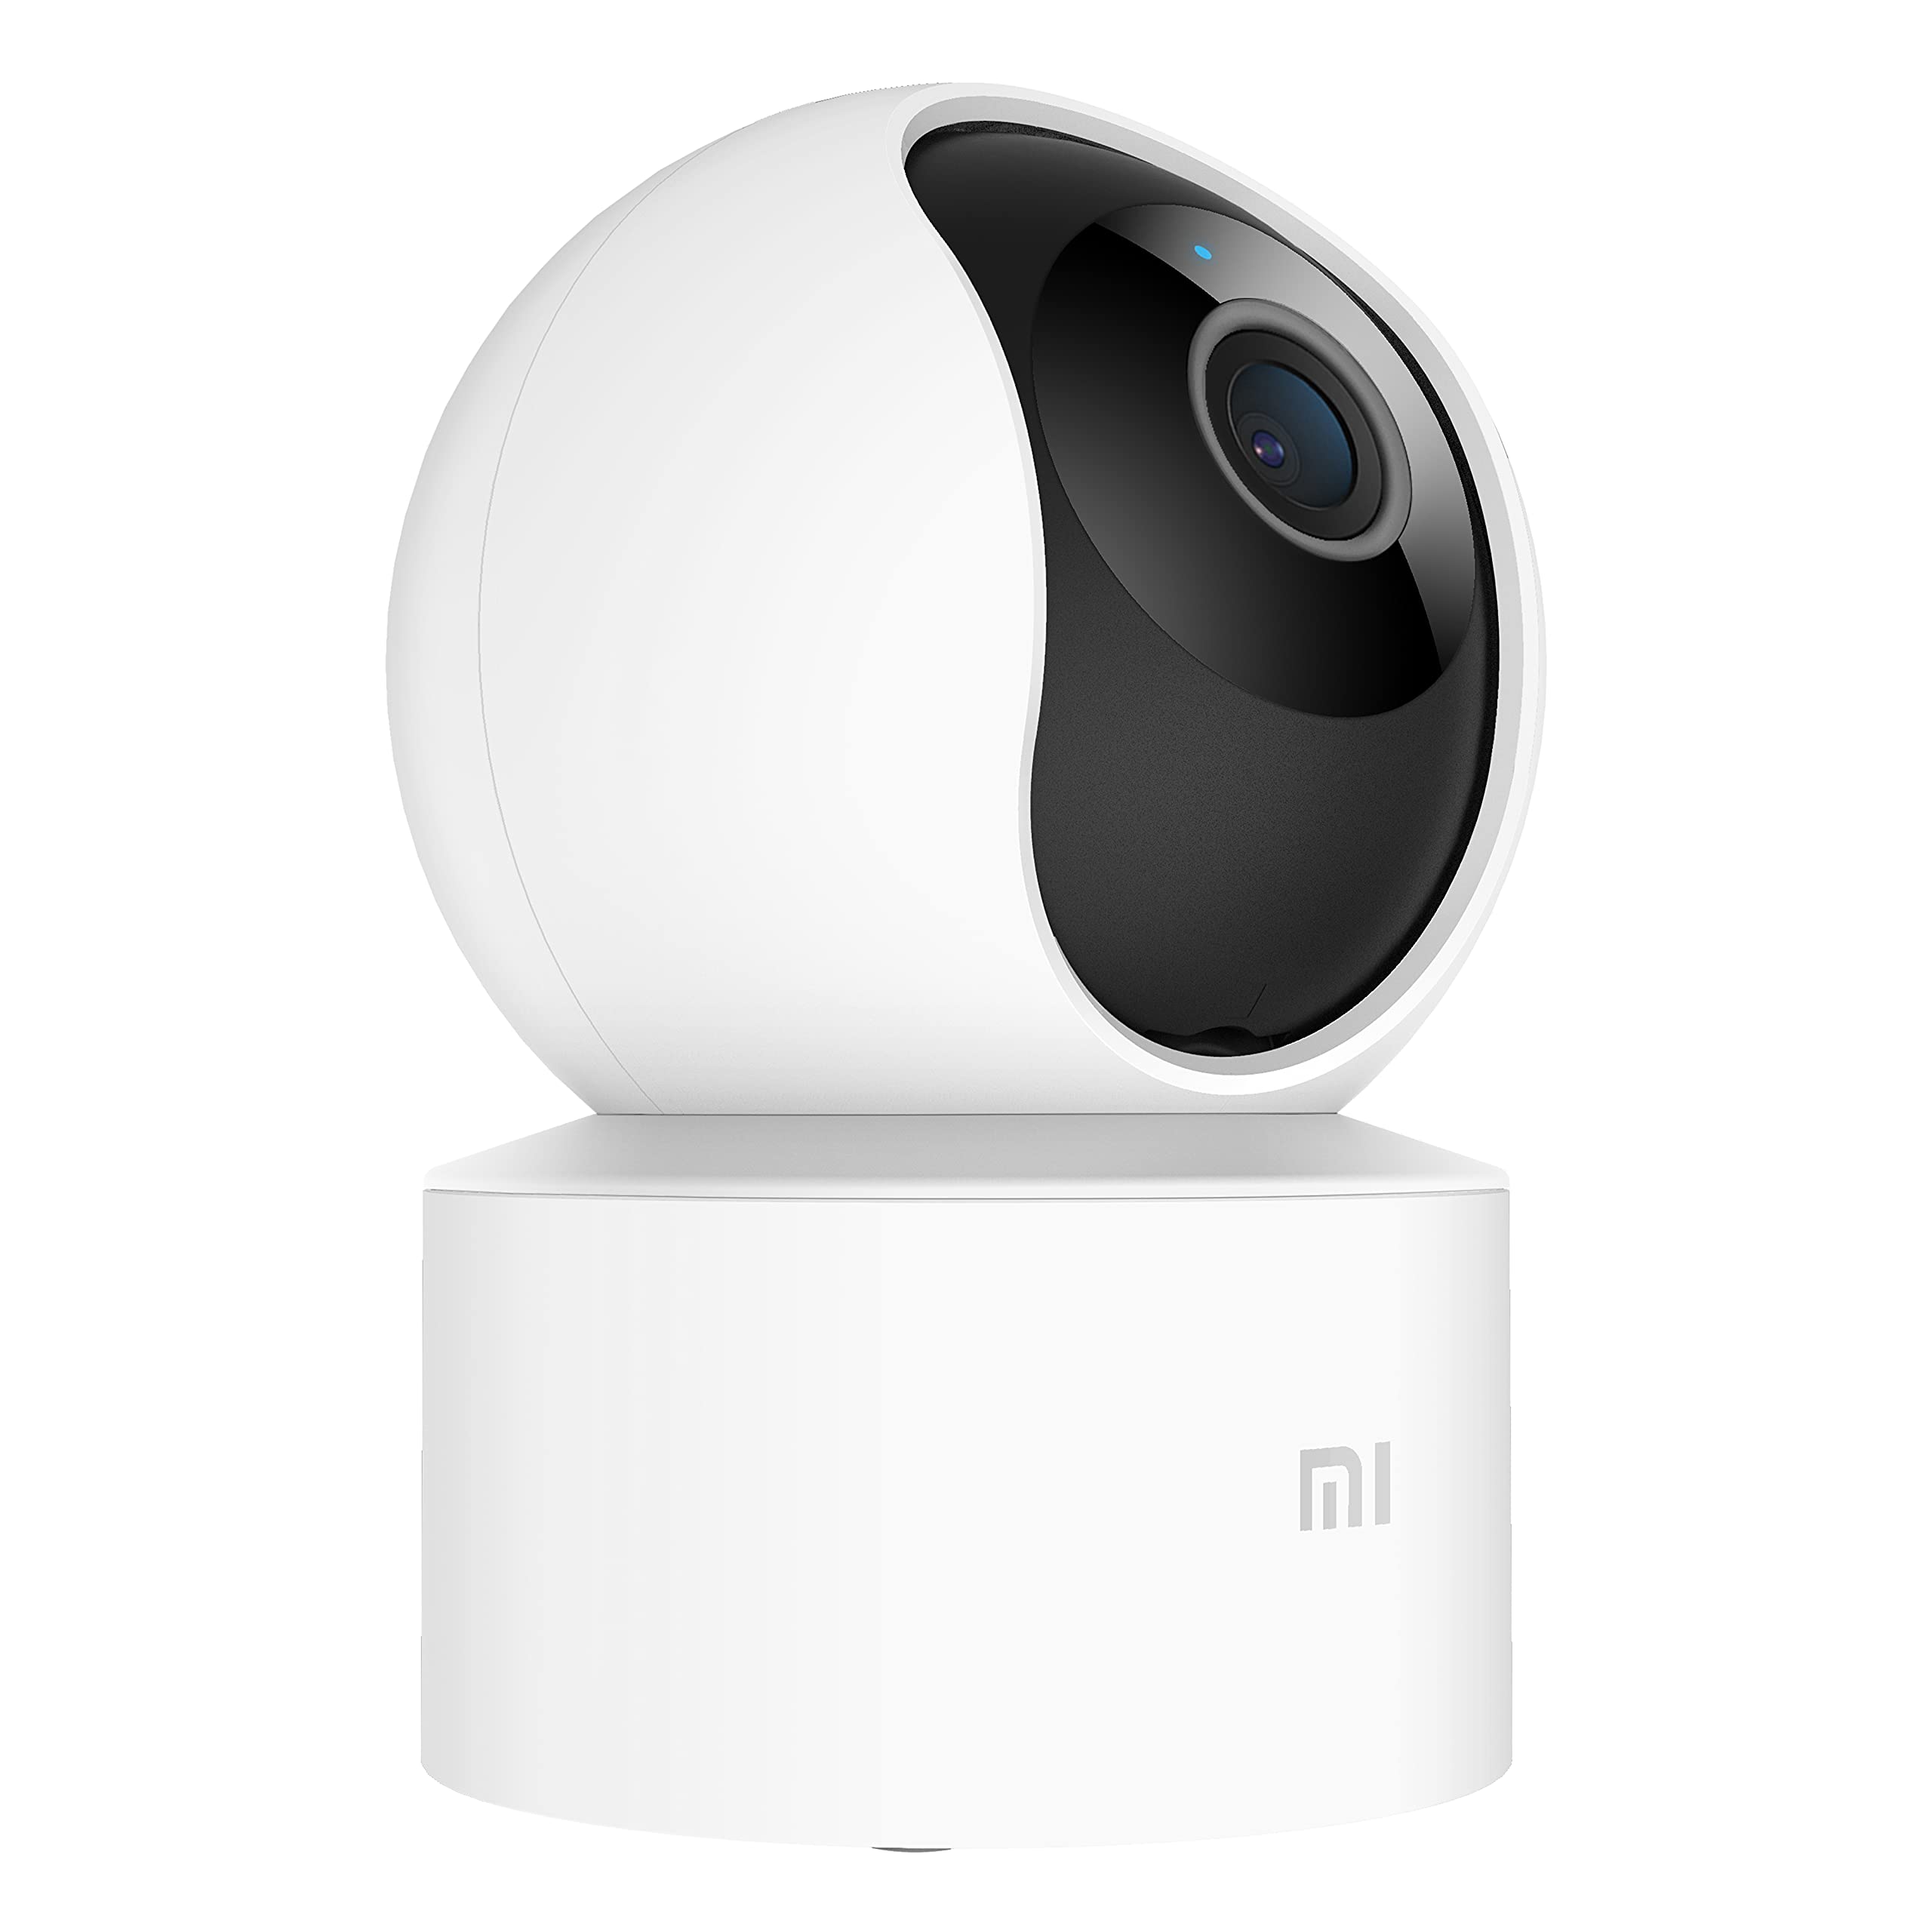 Xiaomi Mi Home Security Camera 360 Degree 1080P White, Mjsxj05cm, - White كاميرا المراقبة المنزلية ب360 درجة من شاومي مي، ابيض